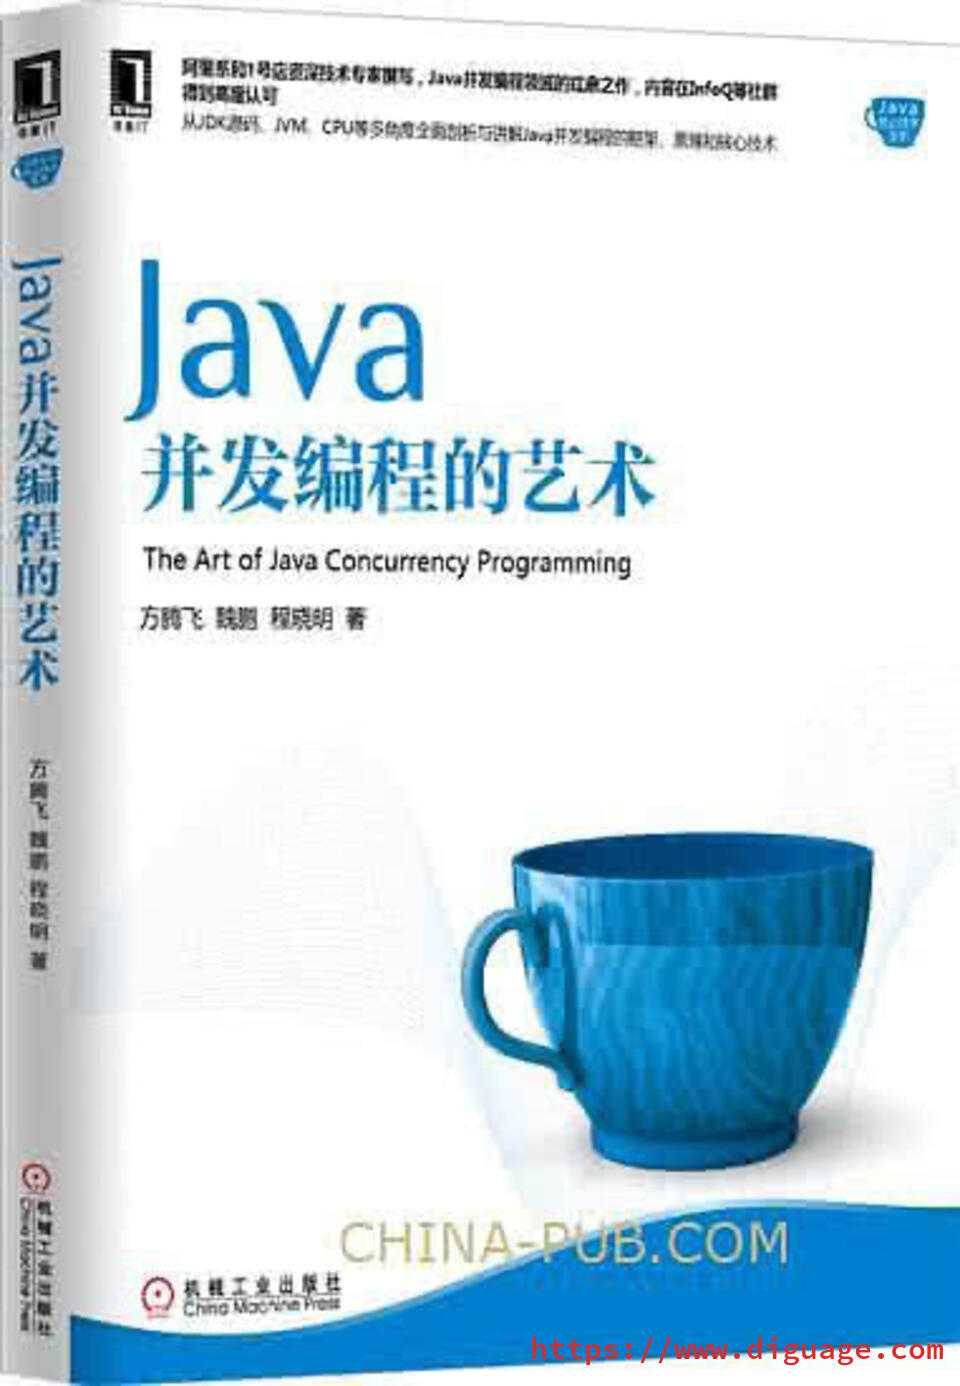 art of java concurrency programming